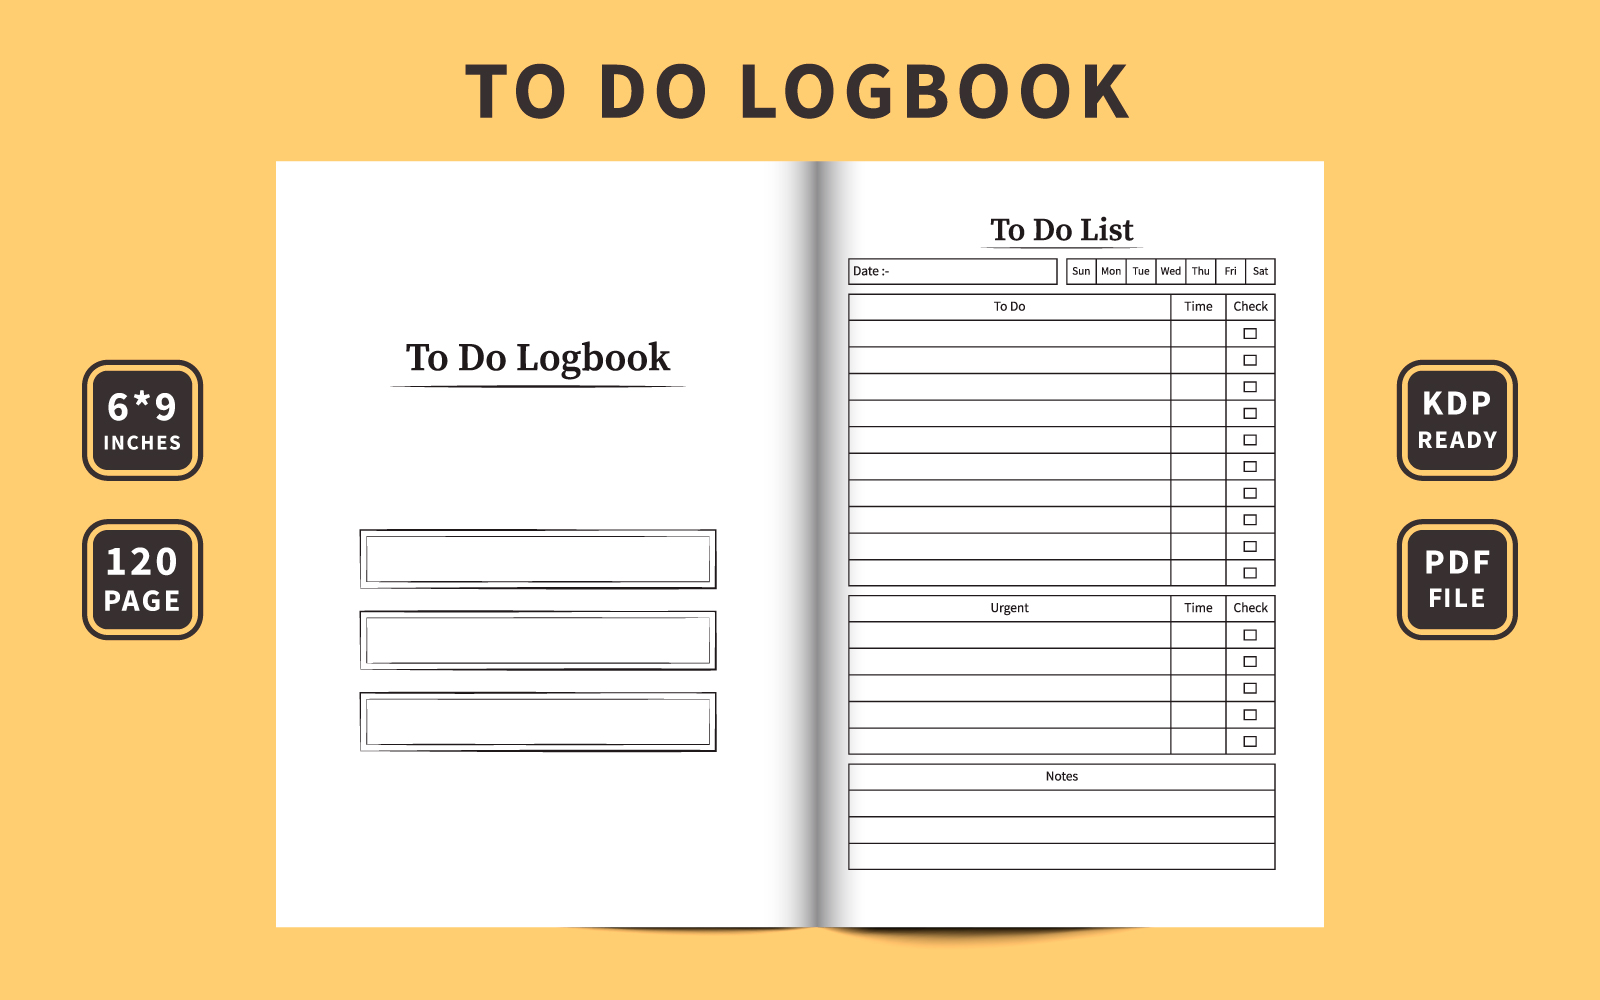 To do list log book interior. Daily task tracker and work progress checklist